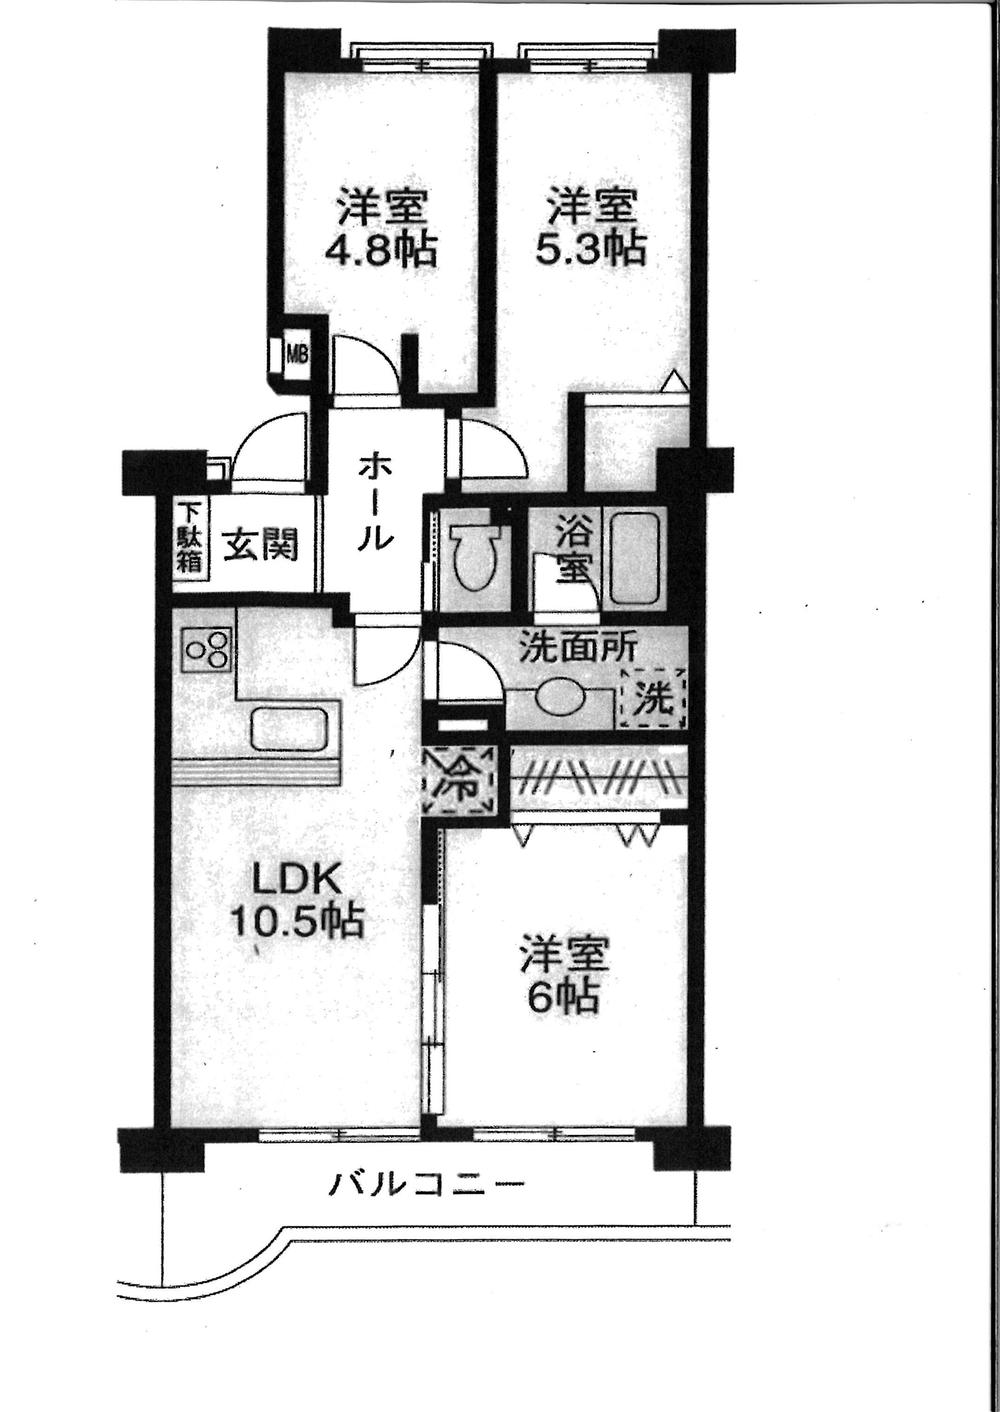 Floor plan. 3LDK, Price 17.8 million yen, Occupied area 61.48 sq m